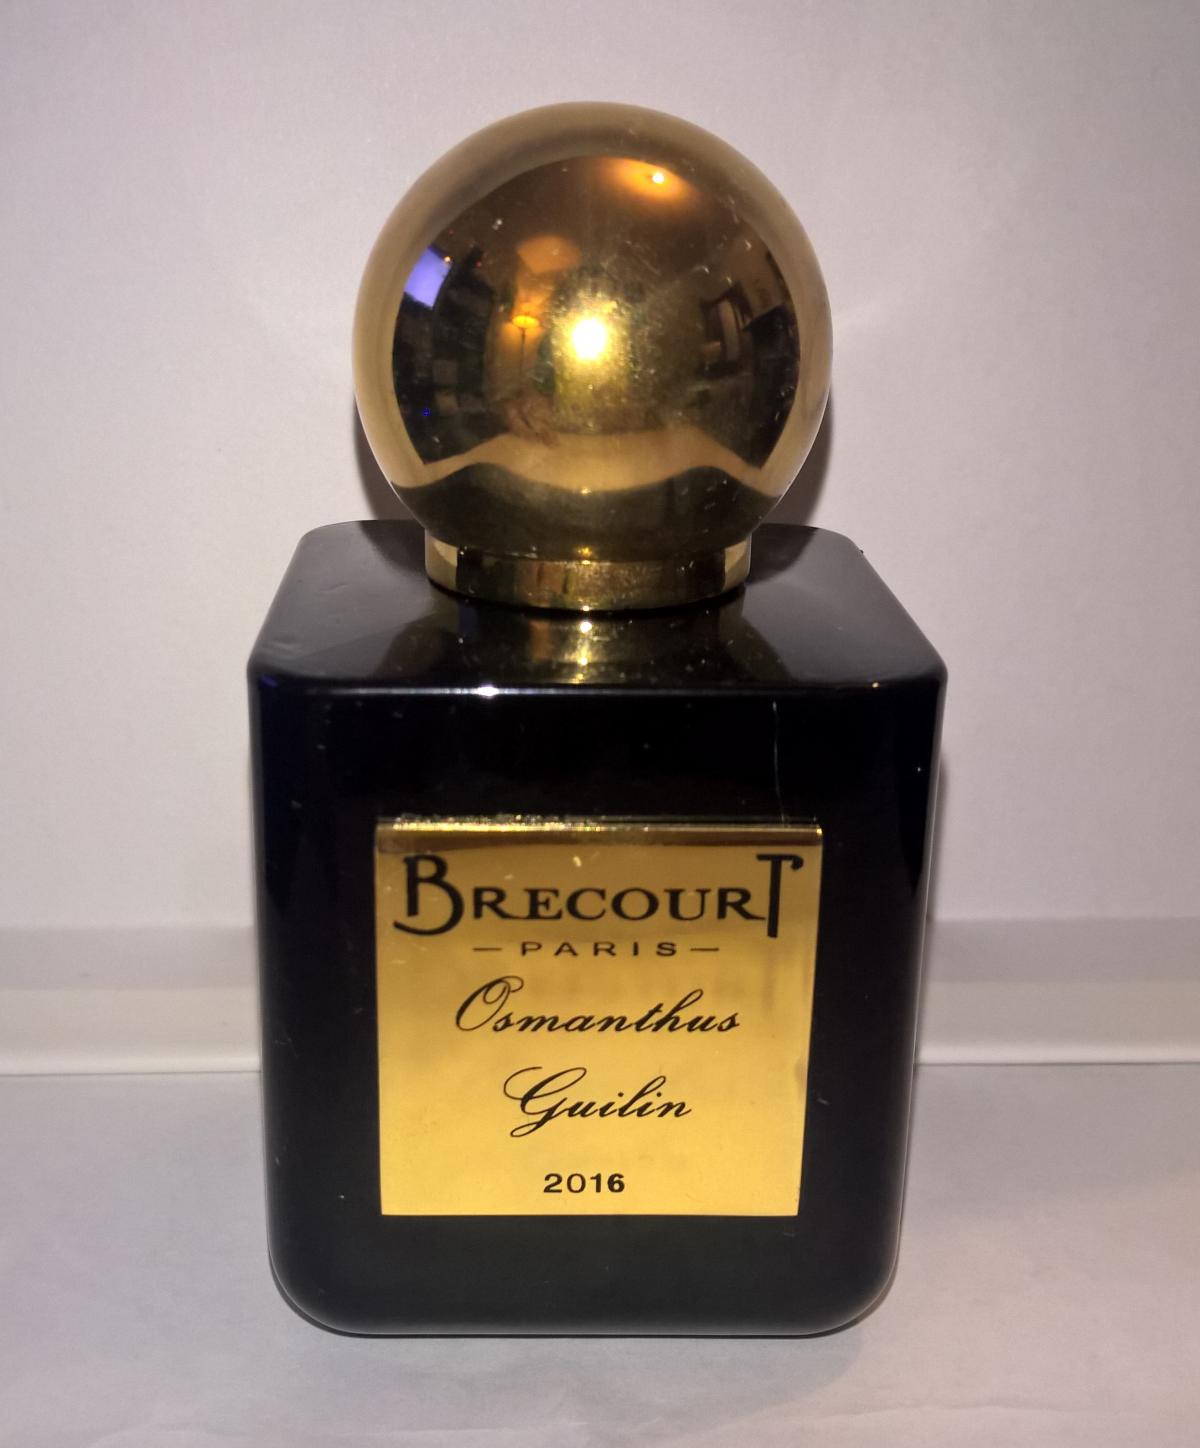 Brecourt osmanthus guilin. Osmanthus духи. Духи Brecourt Rosa Gallica. Brecourt Osmanthus Guilin Perfume.